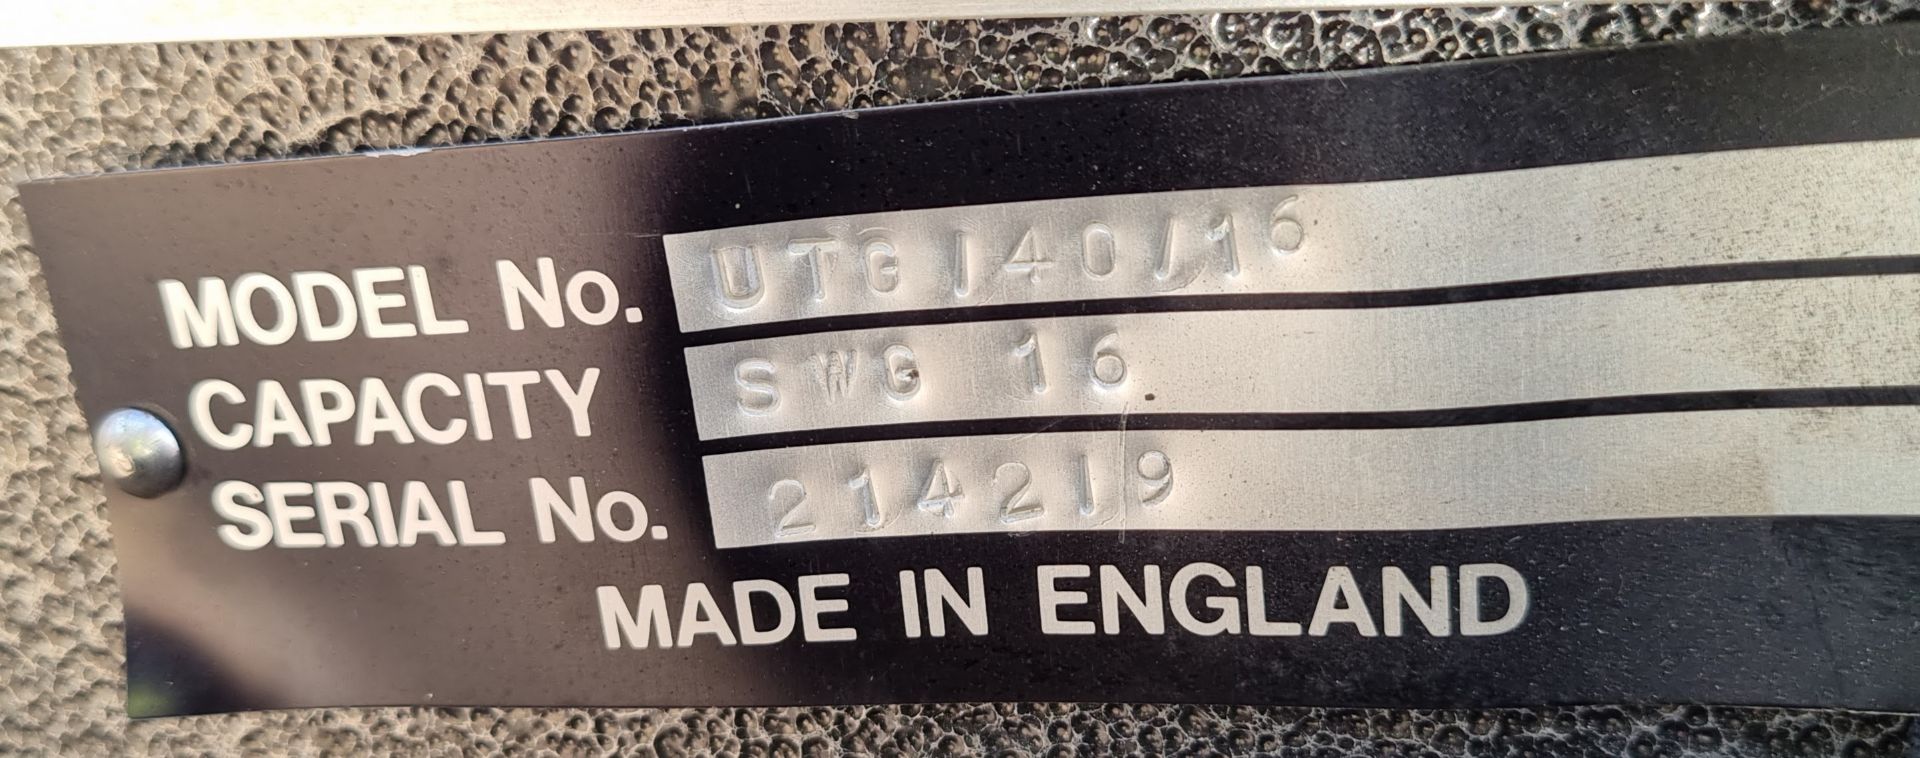 Waltons UTG/40/16 Sheet metal shearing machine - Cap SWG 16 - L 1550 x W 1240 x H 1180mm - comes wit - Image 2 of 10